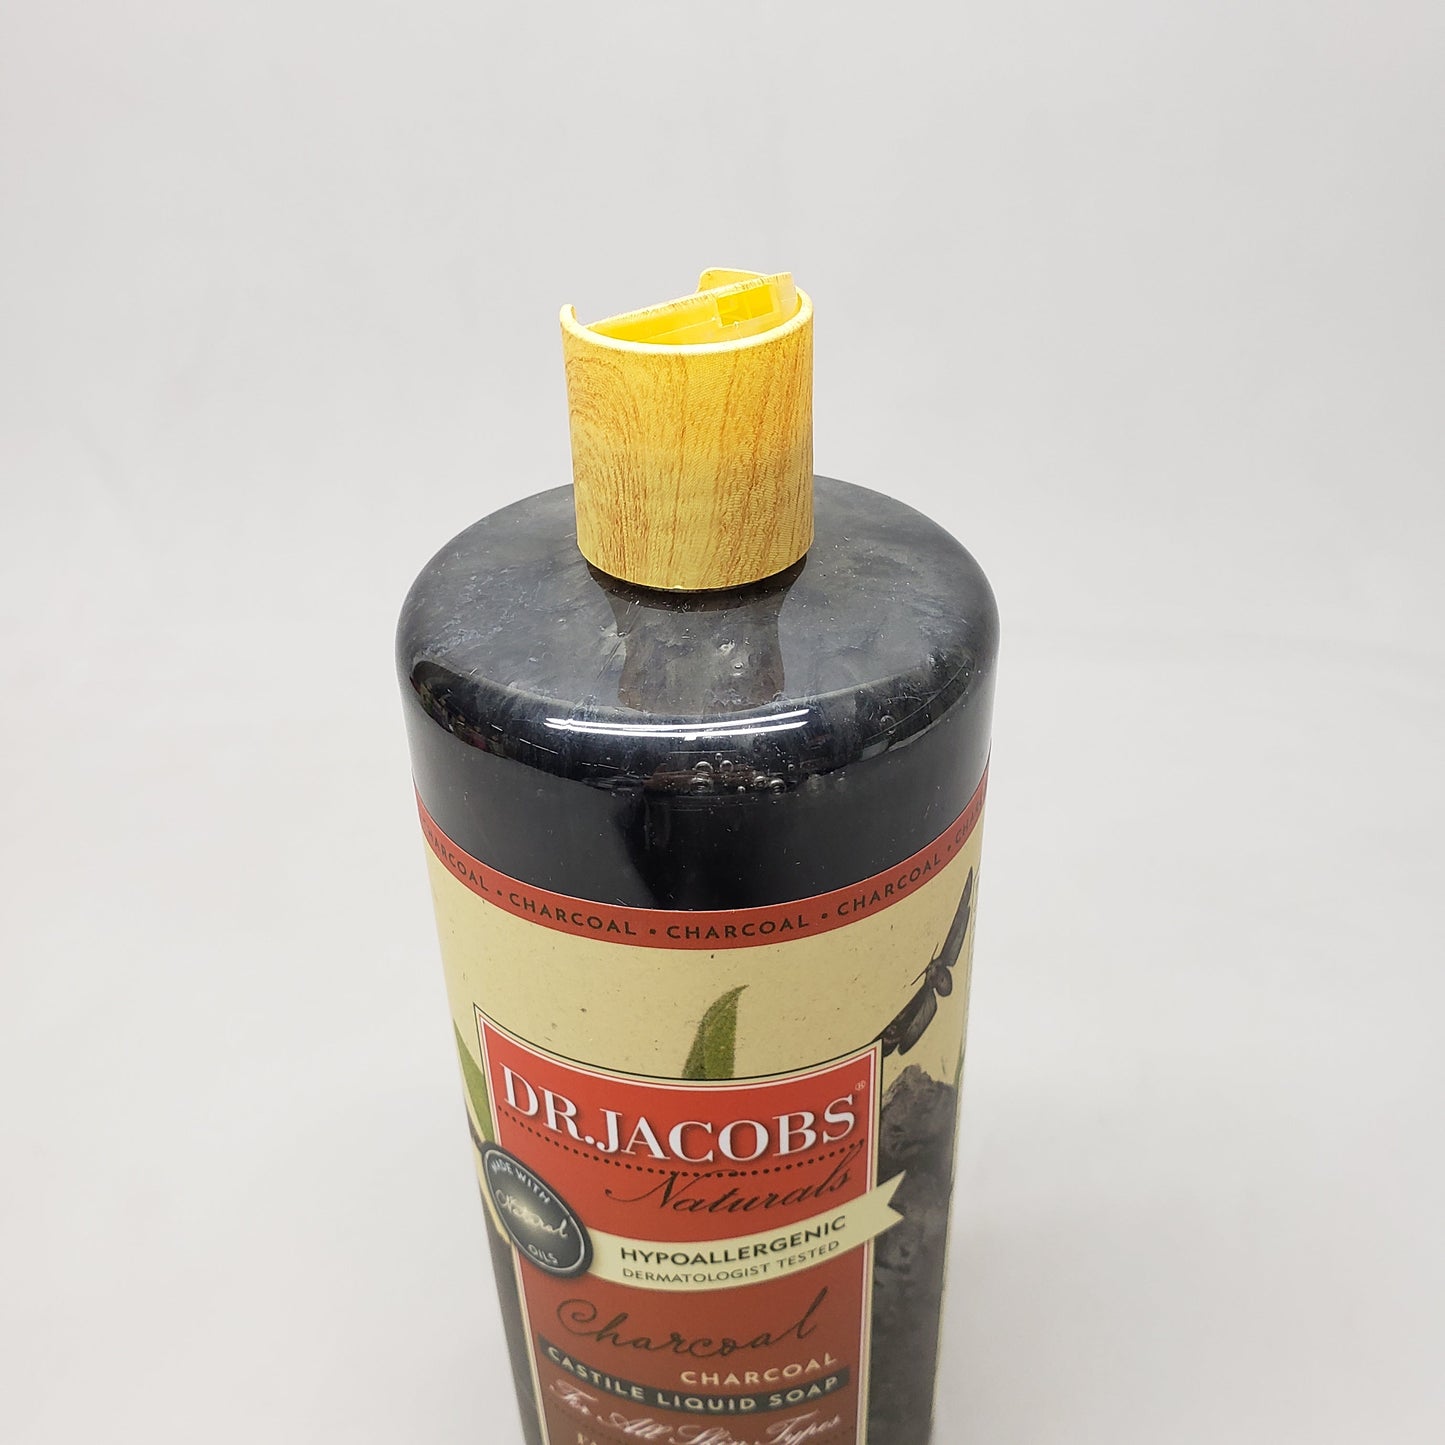 DR. JACOBS NATURALS Charcoal Castile Liquid Soap Lot of 4 - 32 oz Hypoallergenic (New)